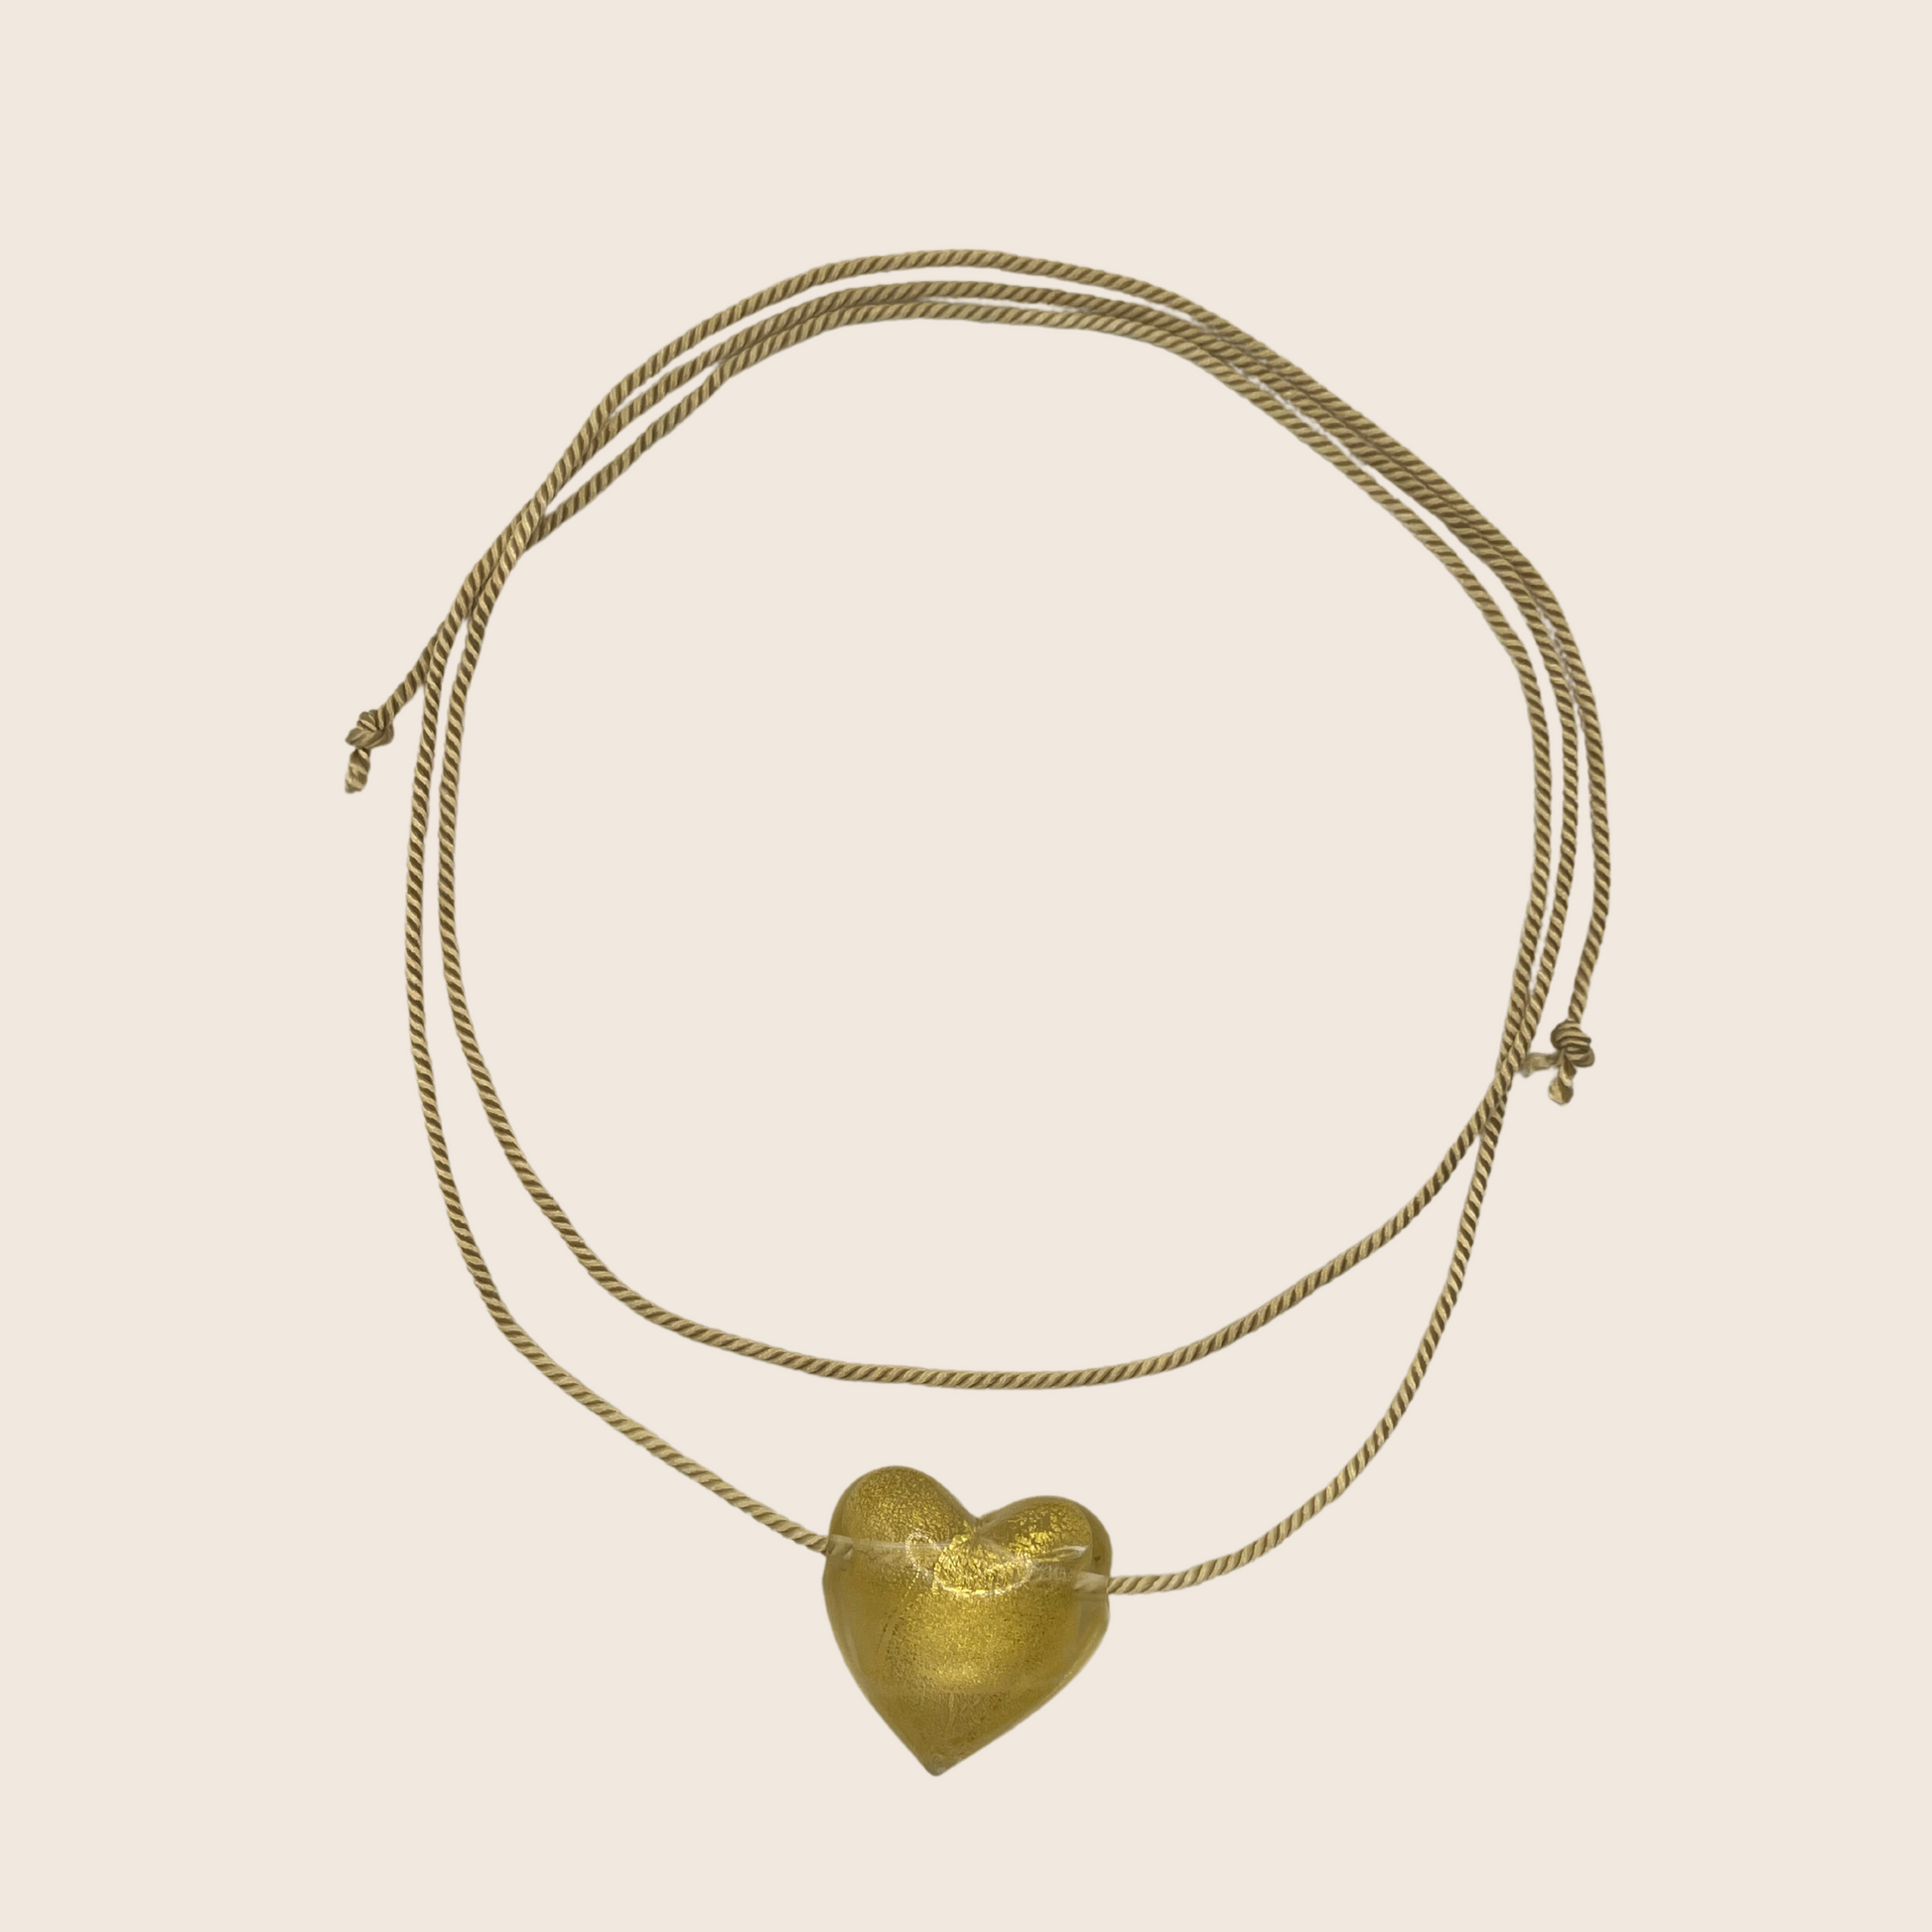 Amora Glass Heart Necklace - Lemon Lua Amora Glass Heart Necklace Lemon Lua Gold Lemon Lua Amora Glass Heart Necklace Amora Glass Heart Necklace